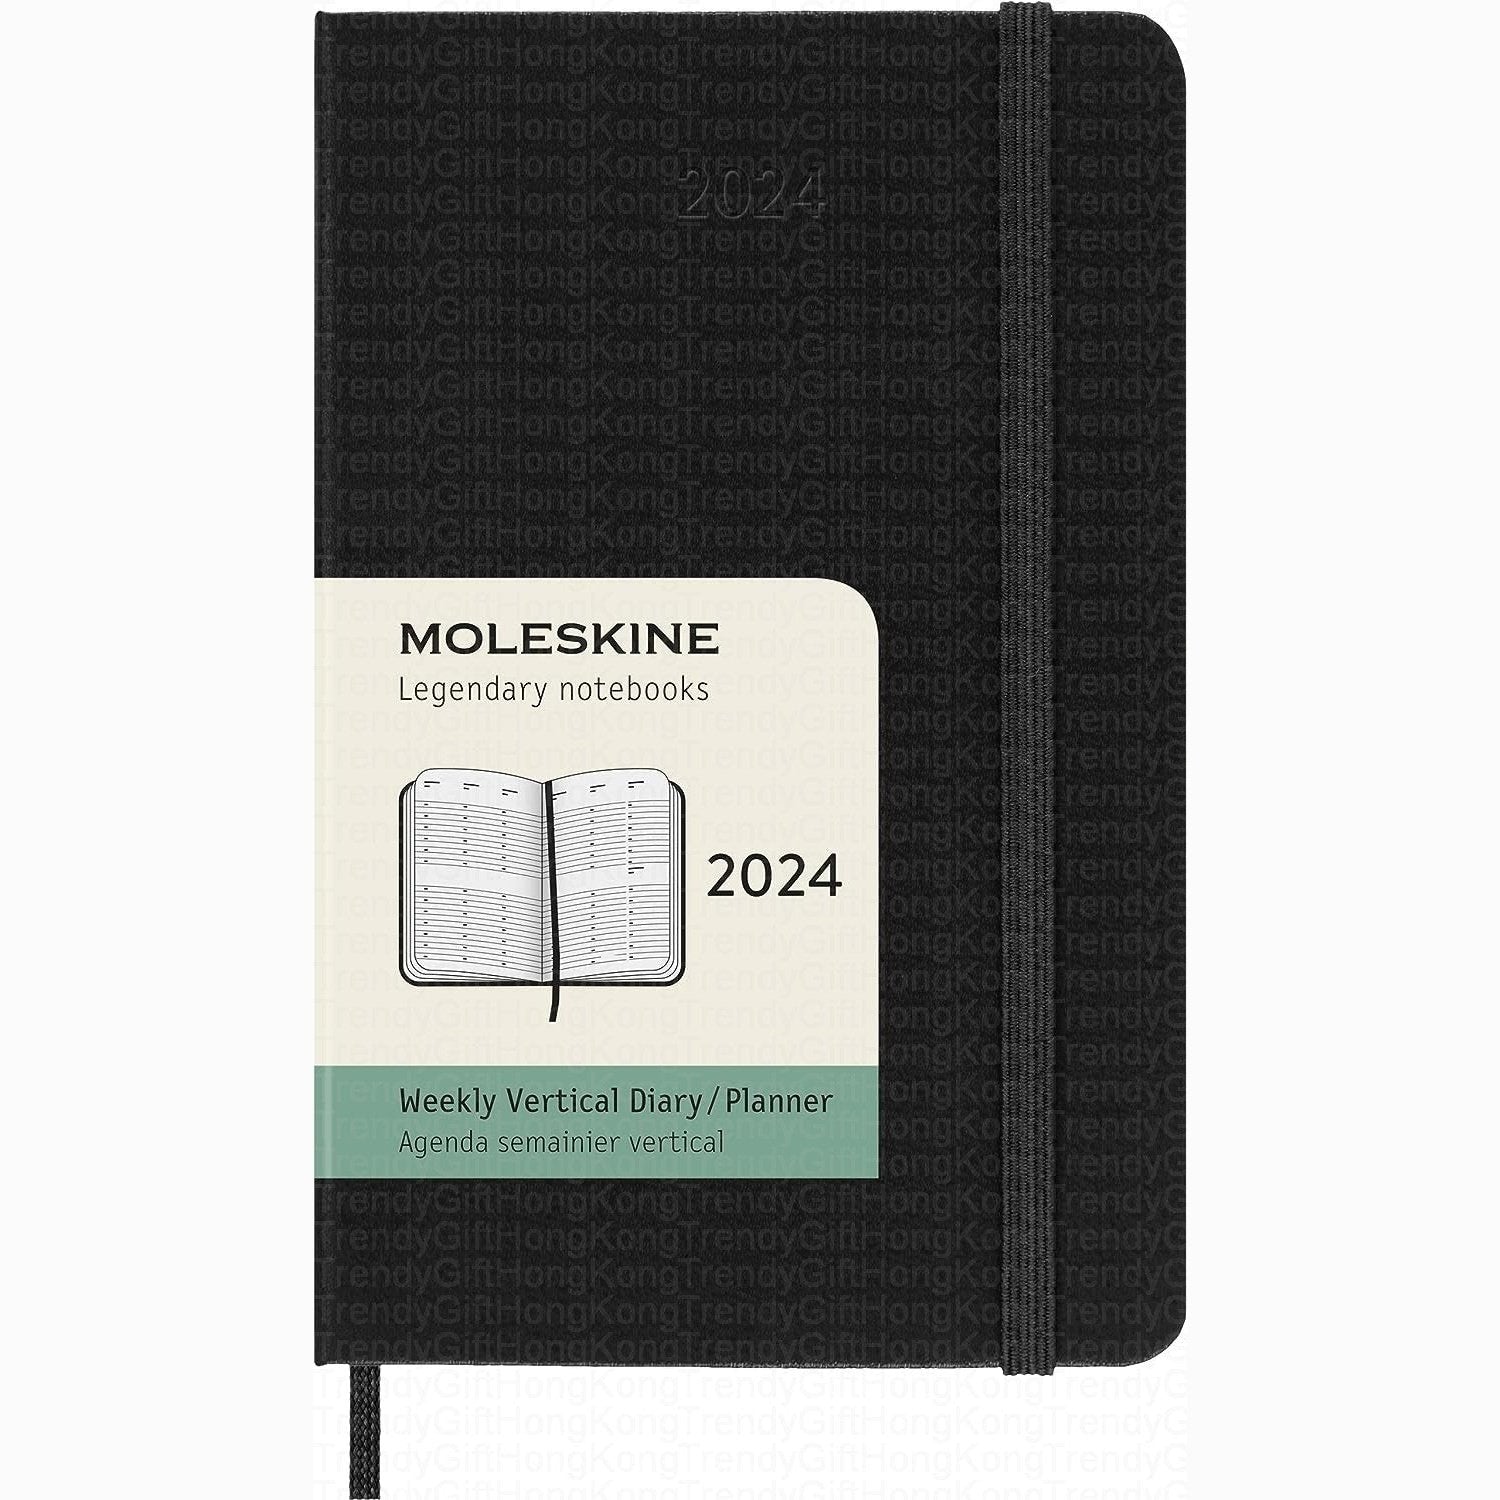 Moleskine 2024 12 Month Weekly Vertical Planner - Black Hard Cover trendygifthk